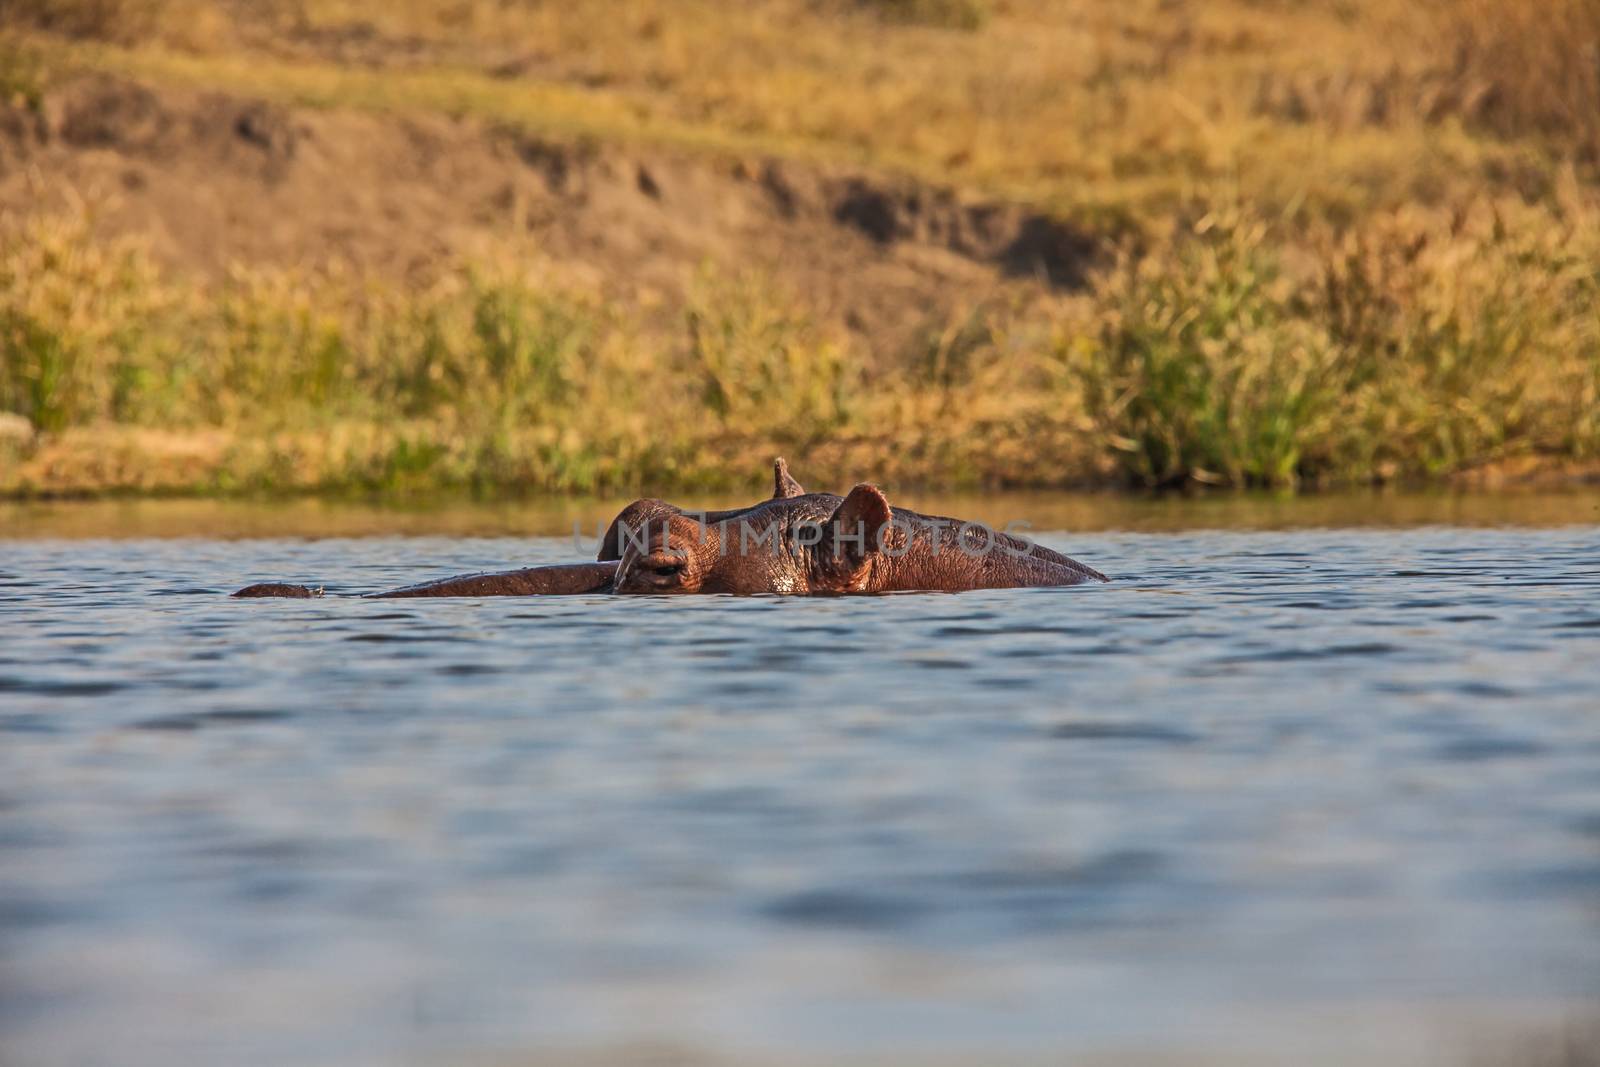 Eye-level Hippo in Kruger National Park 2 by kobus_peche